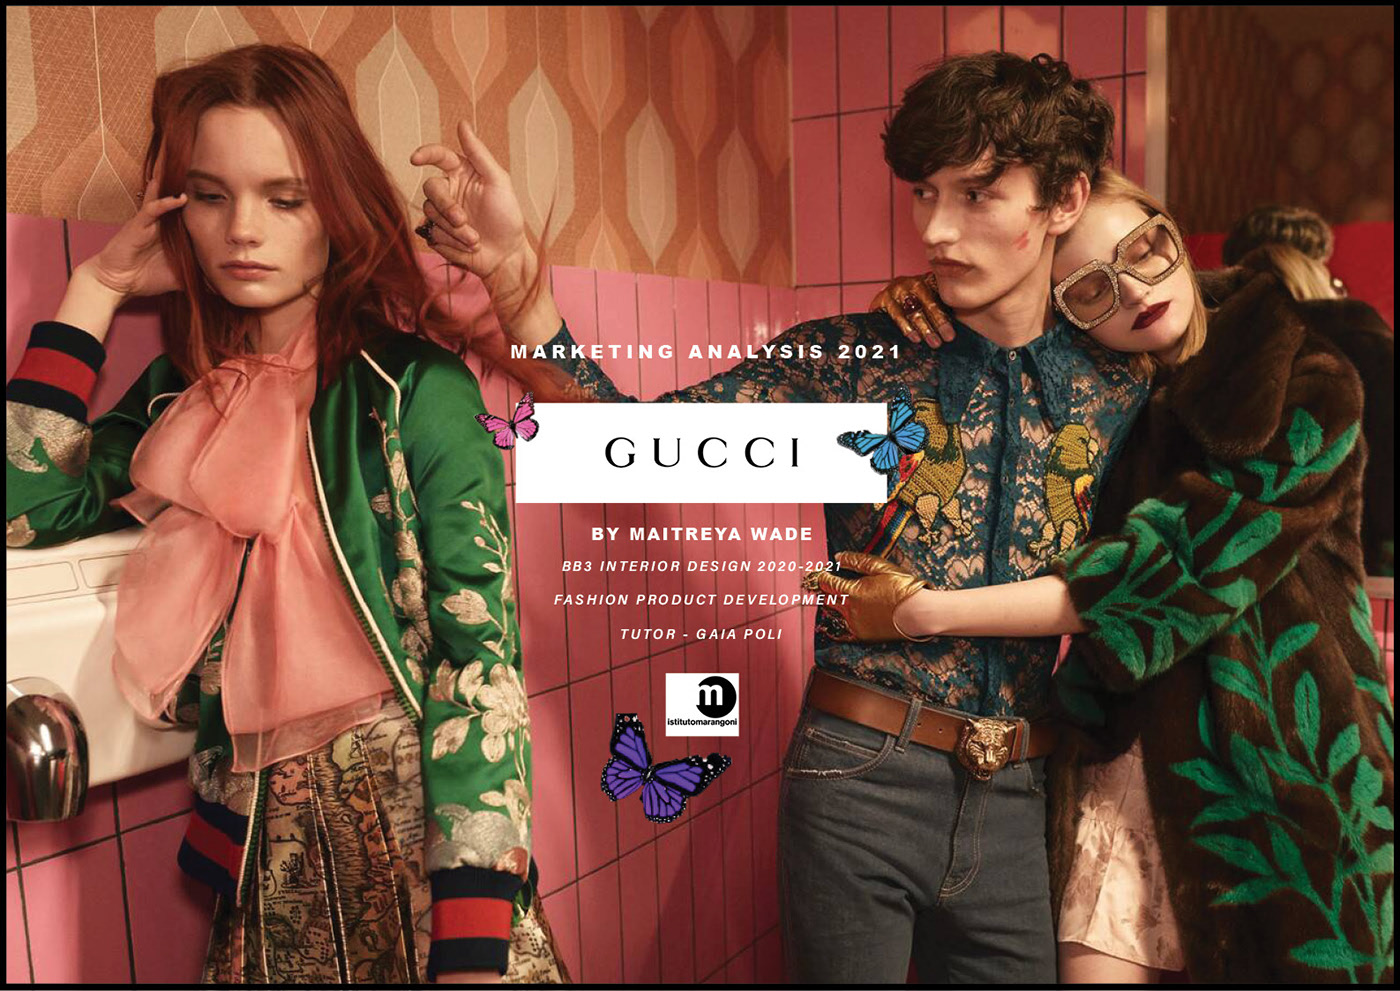 Gucci Marketing Analysis 2021 on Behance